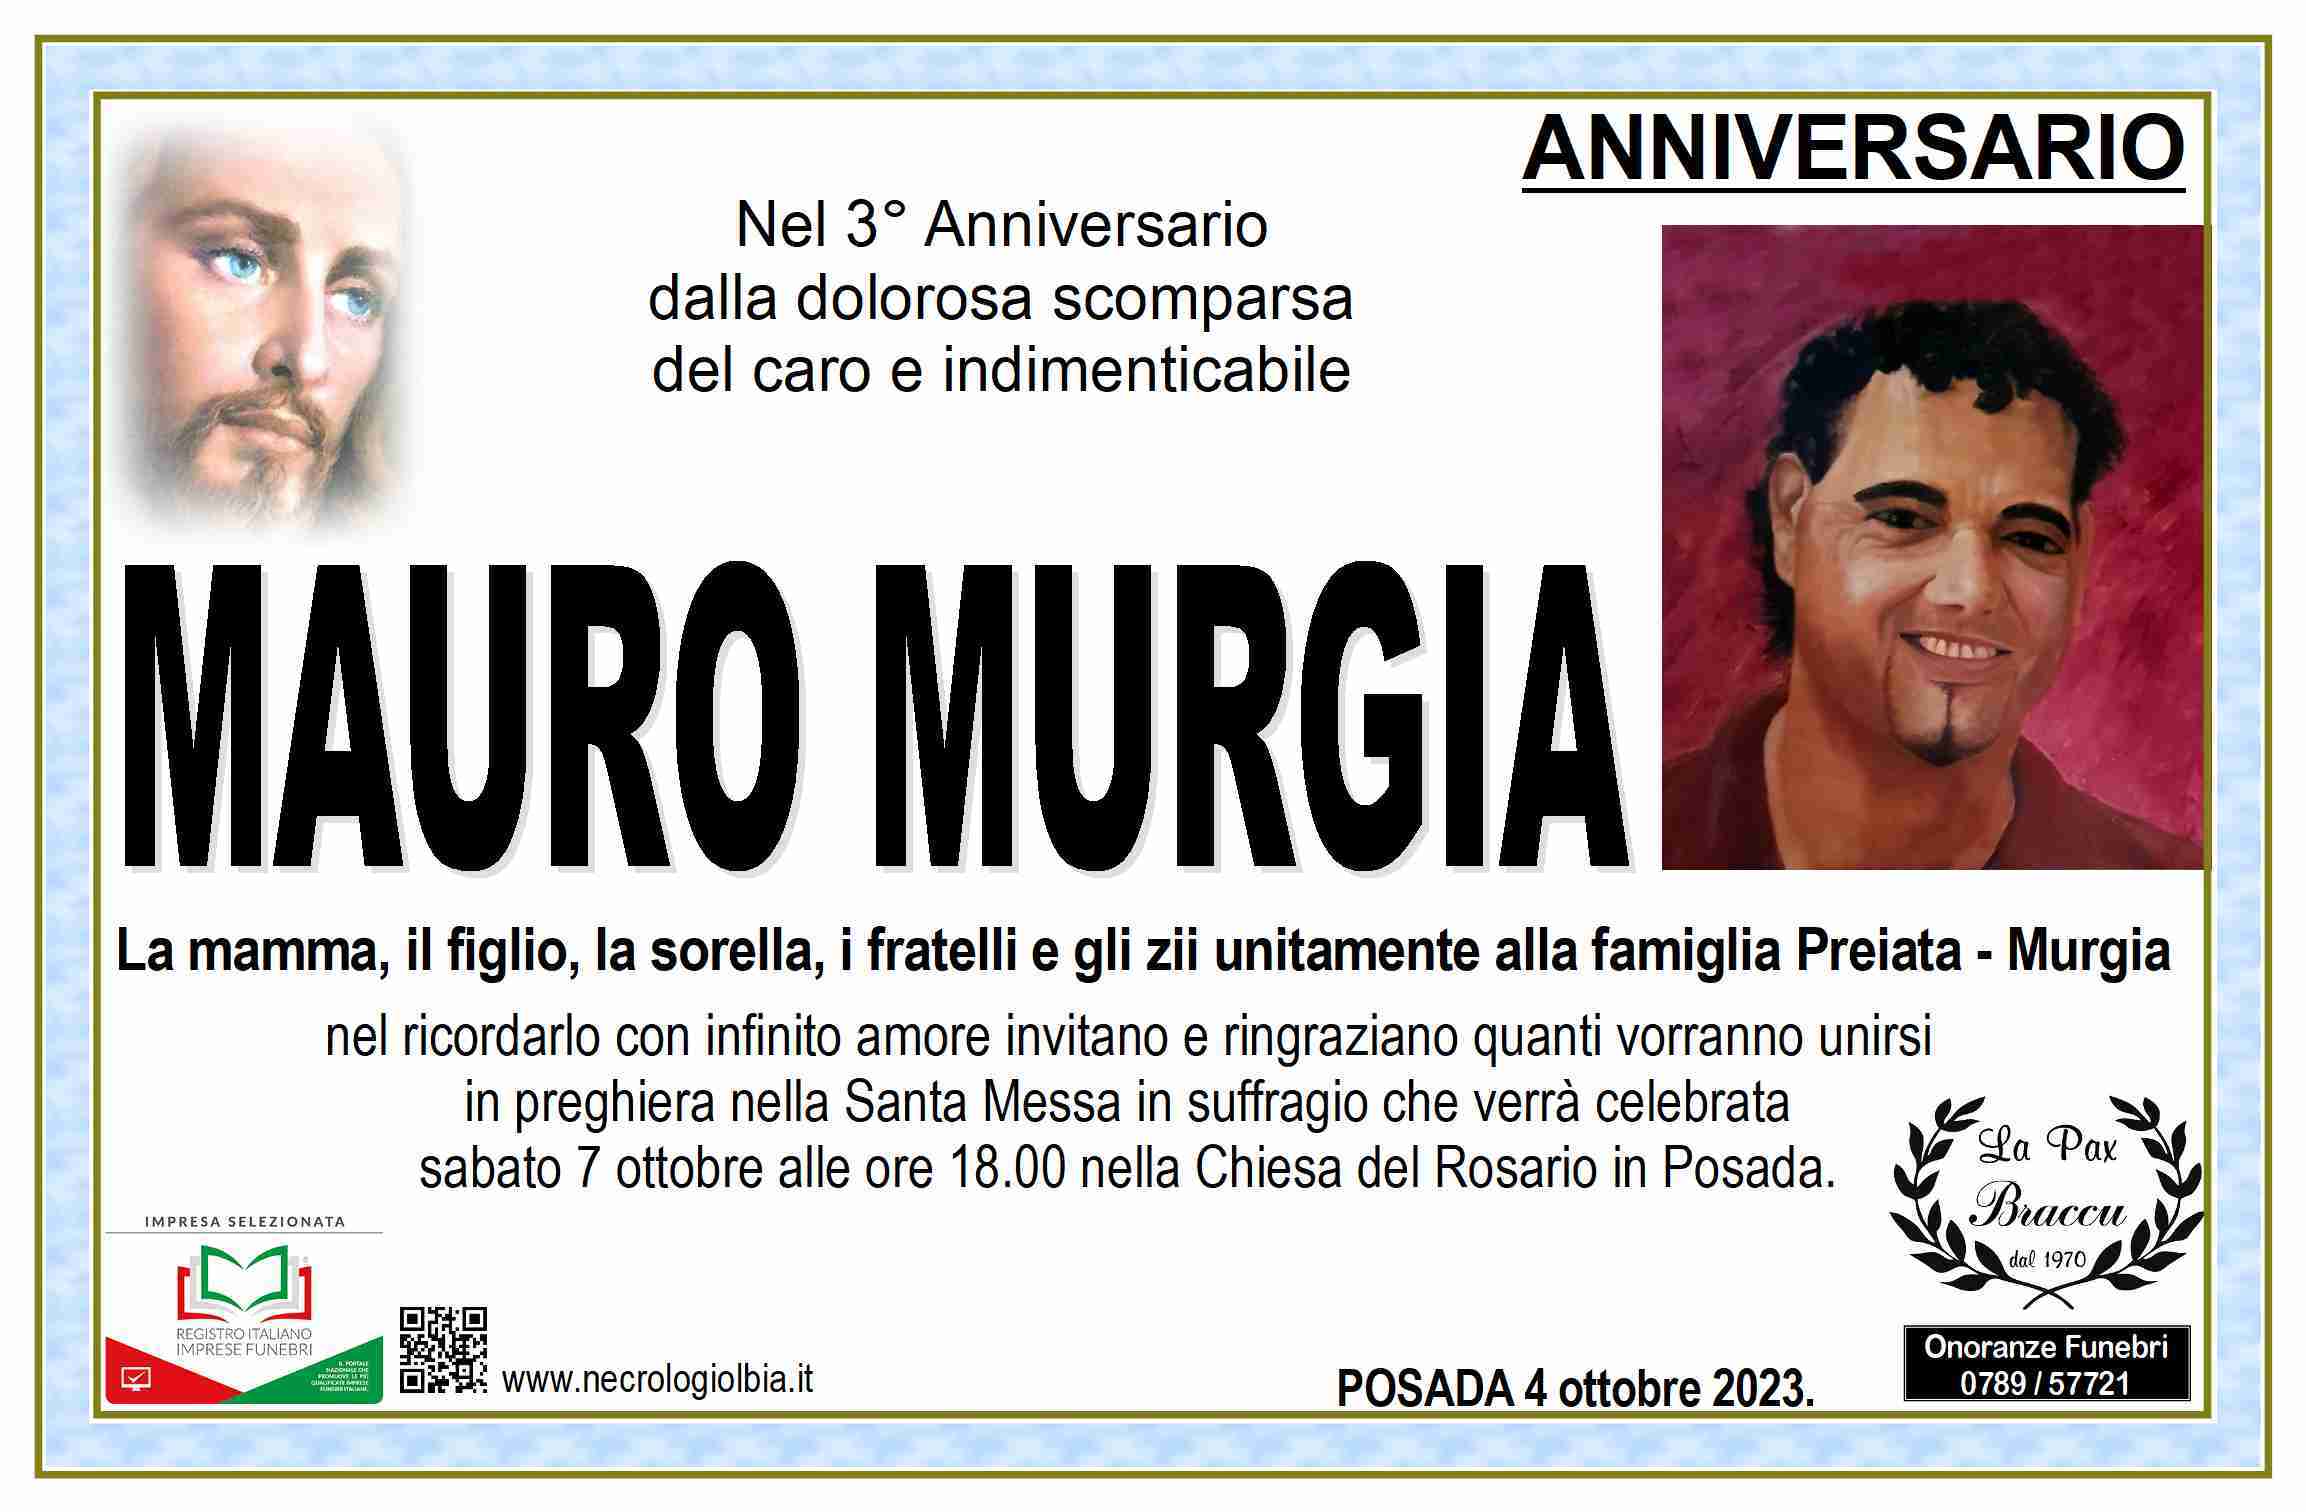 Mauro Murgia